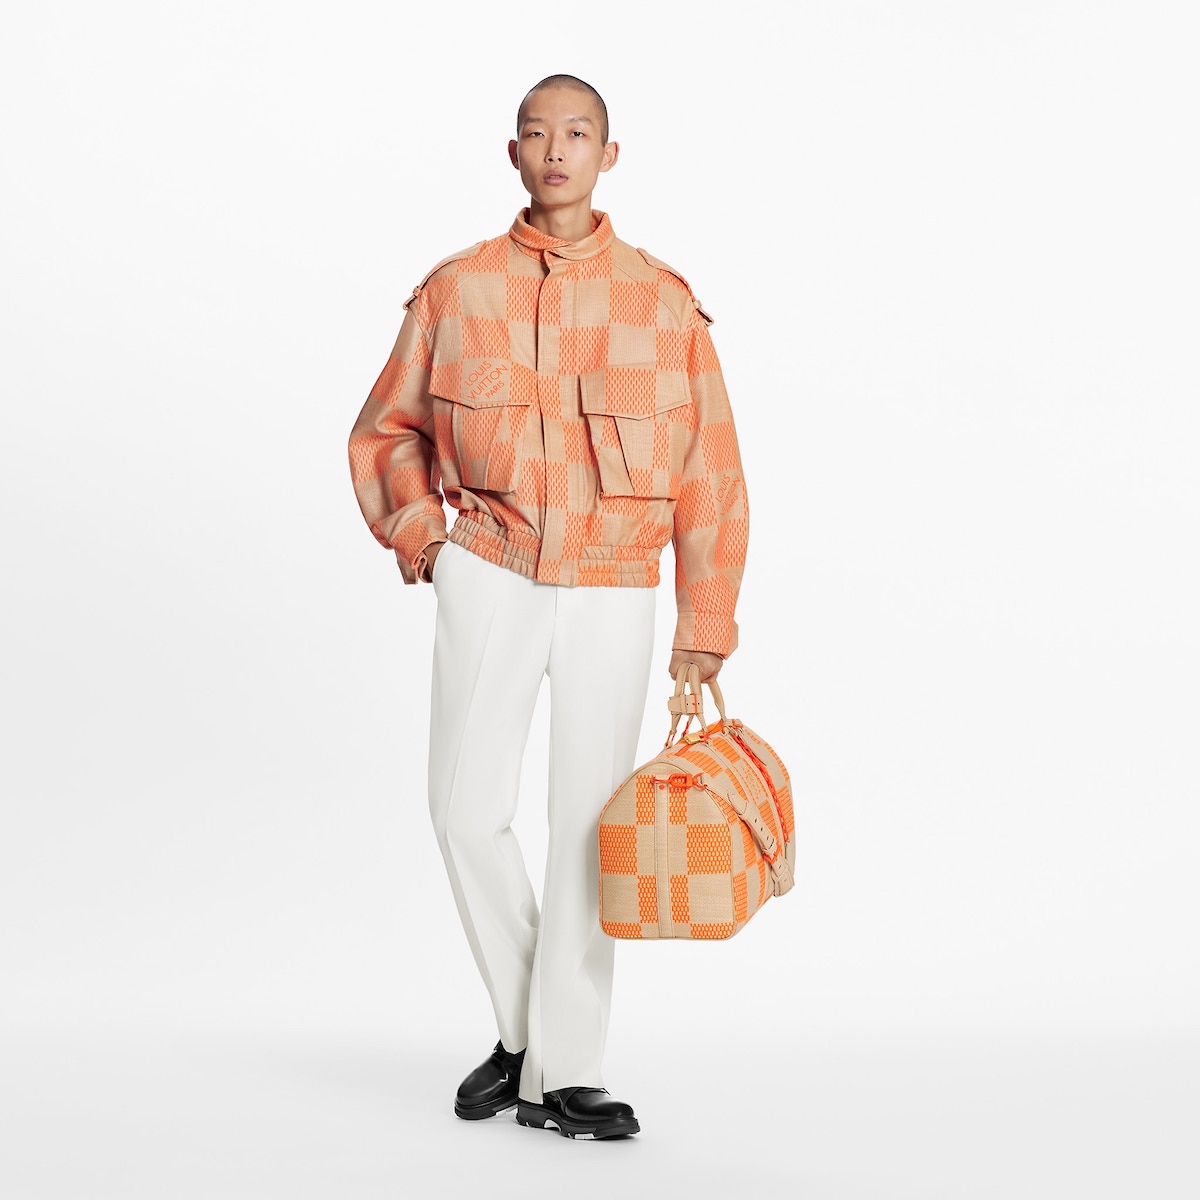 Ovrnundr on Instagram: Louis Vuitton SS24 bomber jacket by